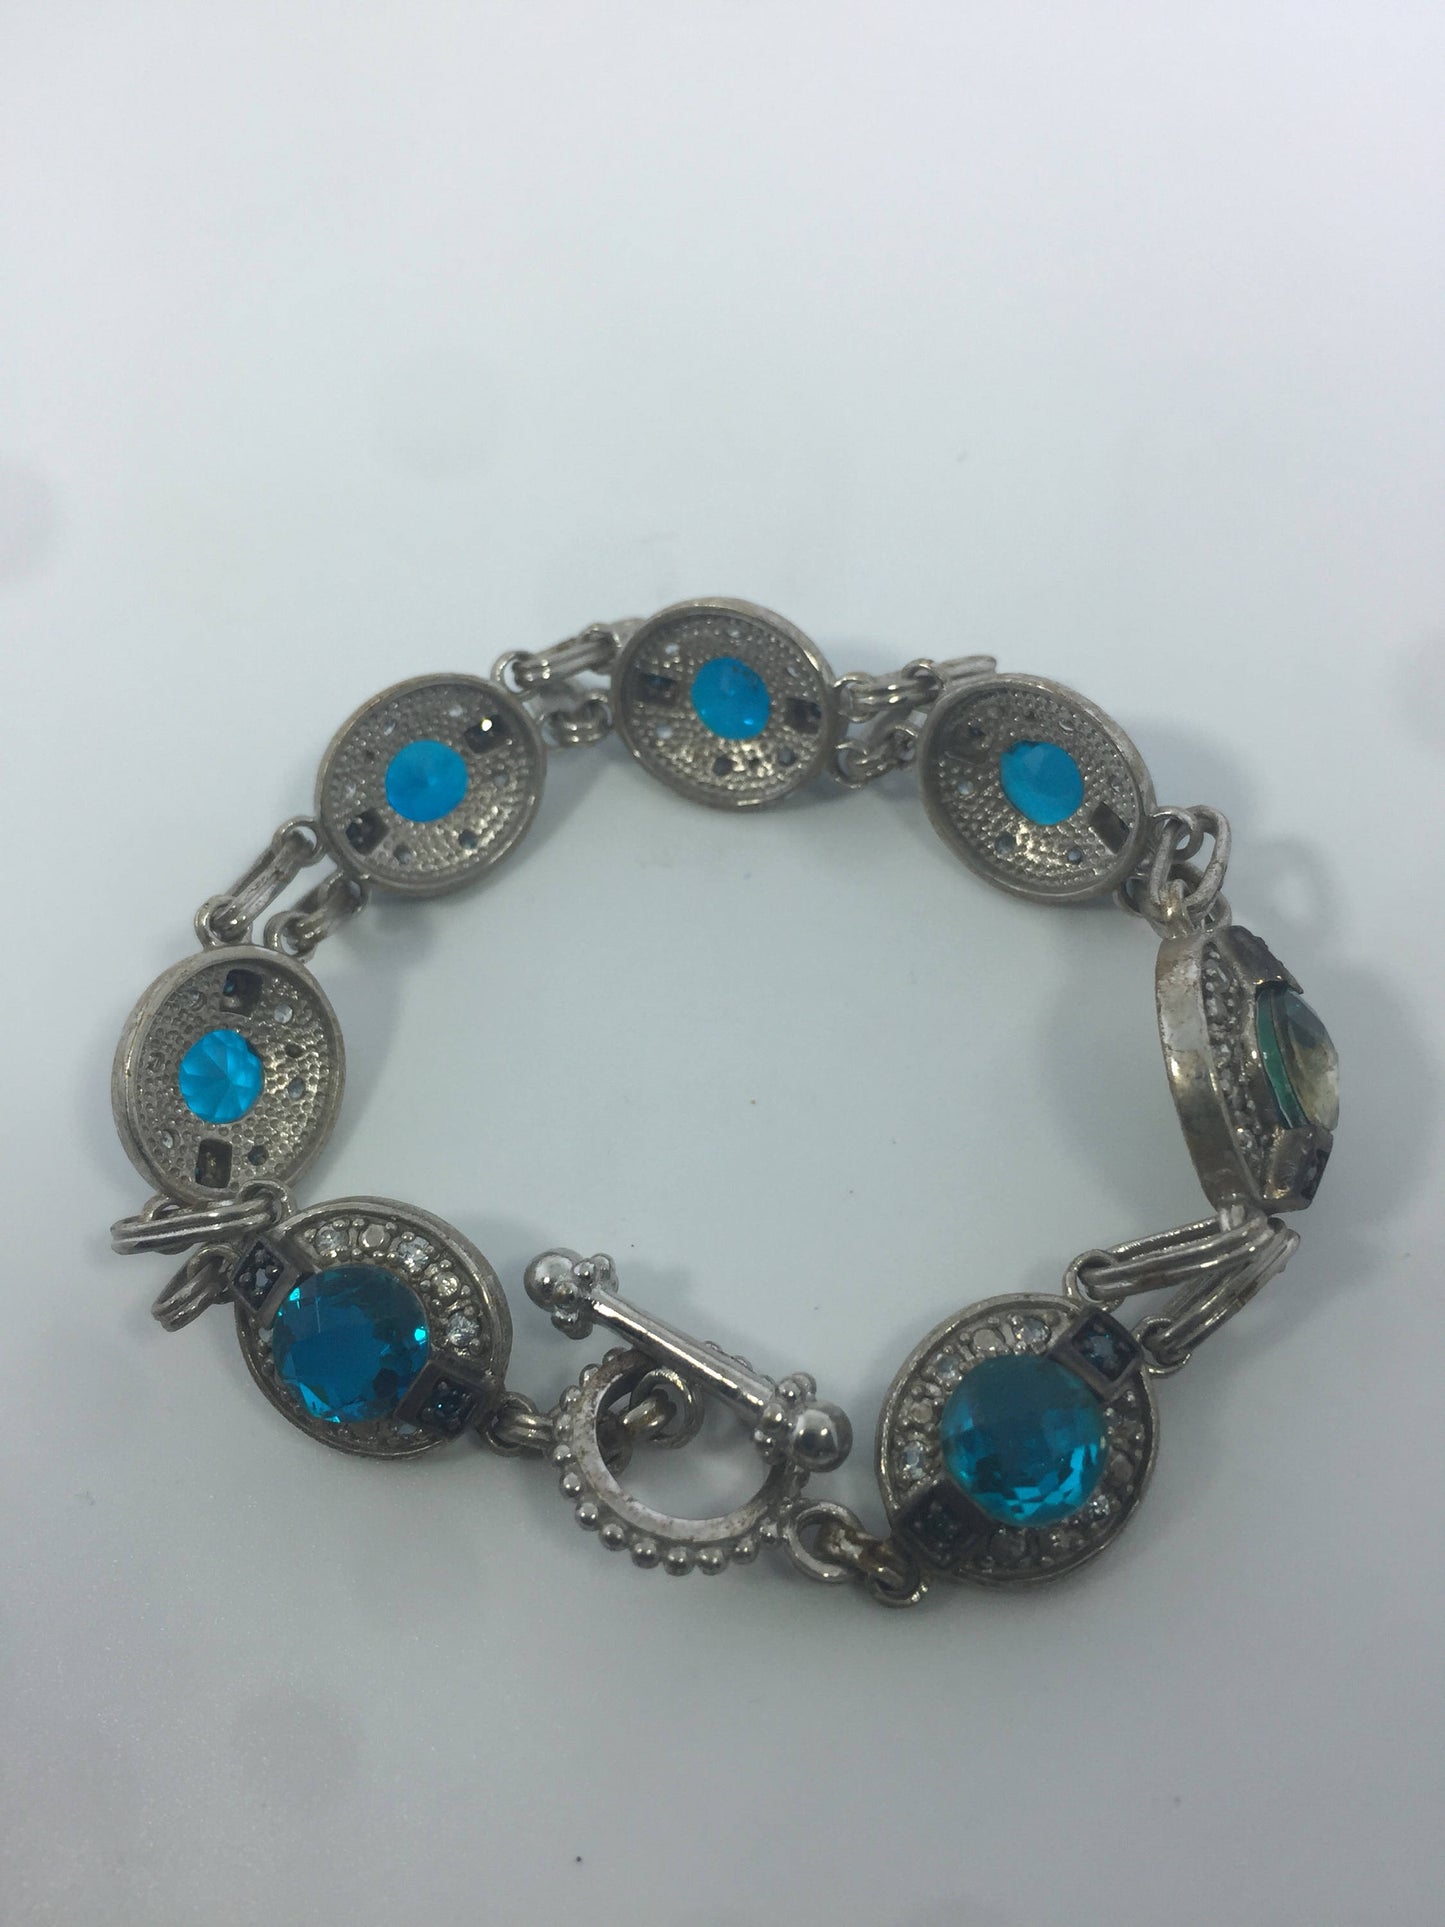 Vintage Handmade Genuine Blue Quartz 925 Sterling Silver Tennis Bracelet